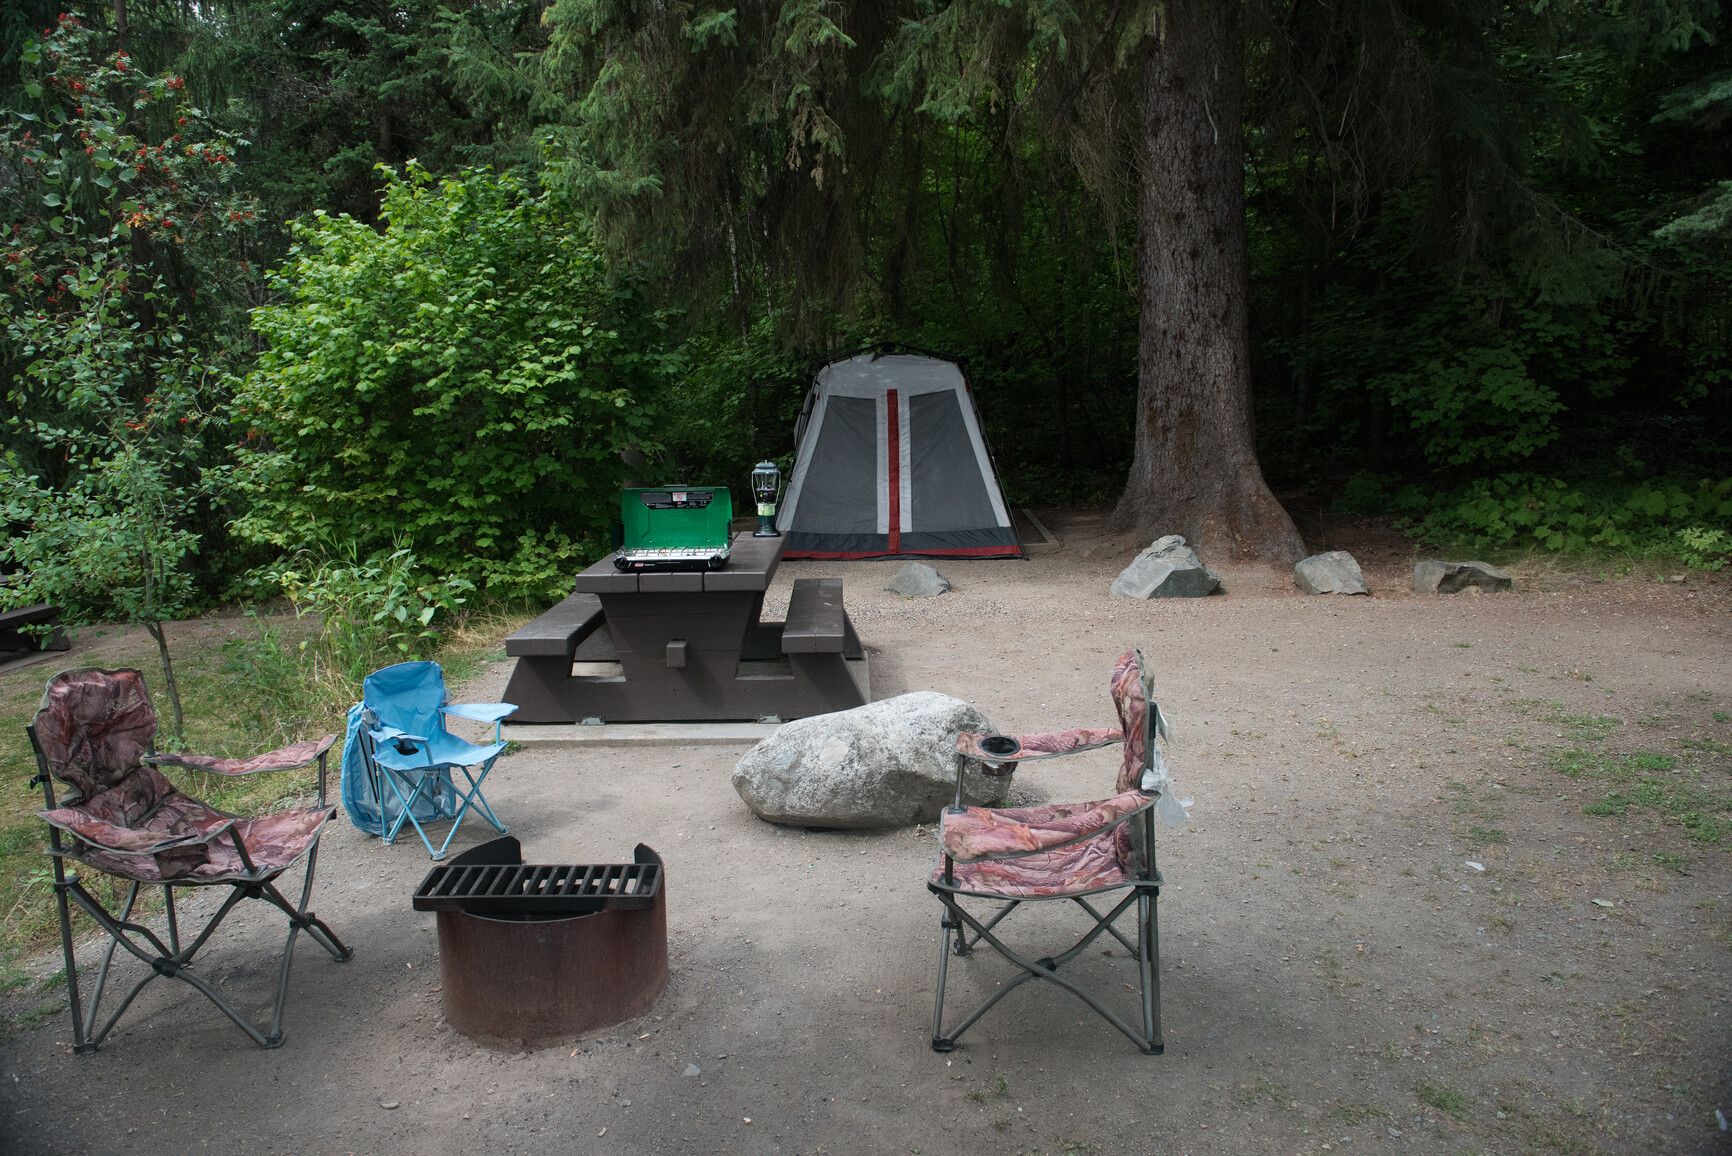 A campsite Seeley Lake Park.